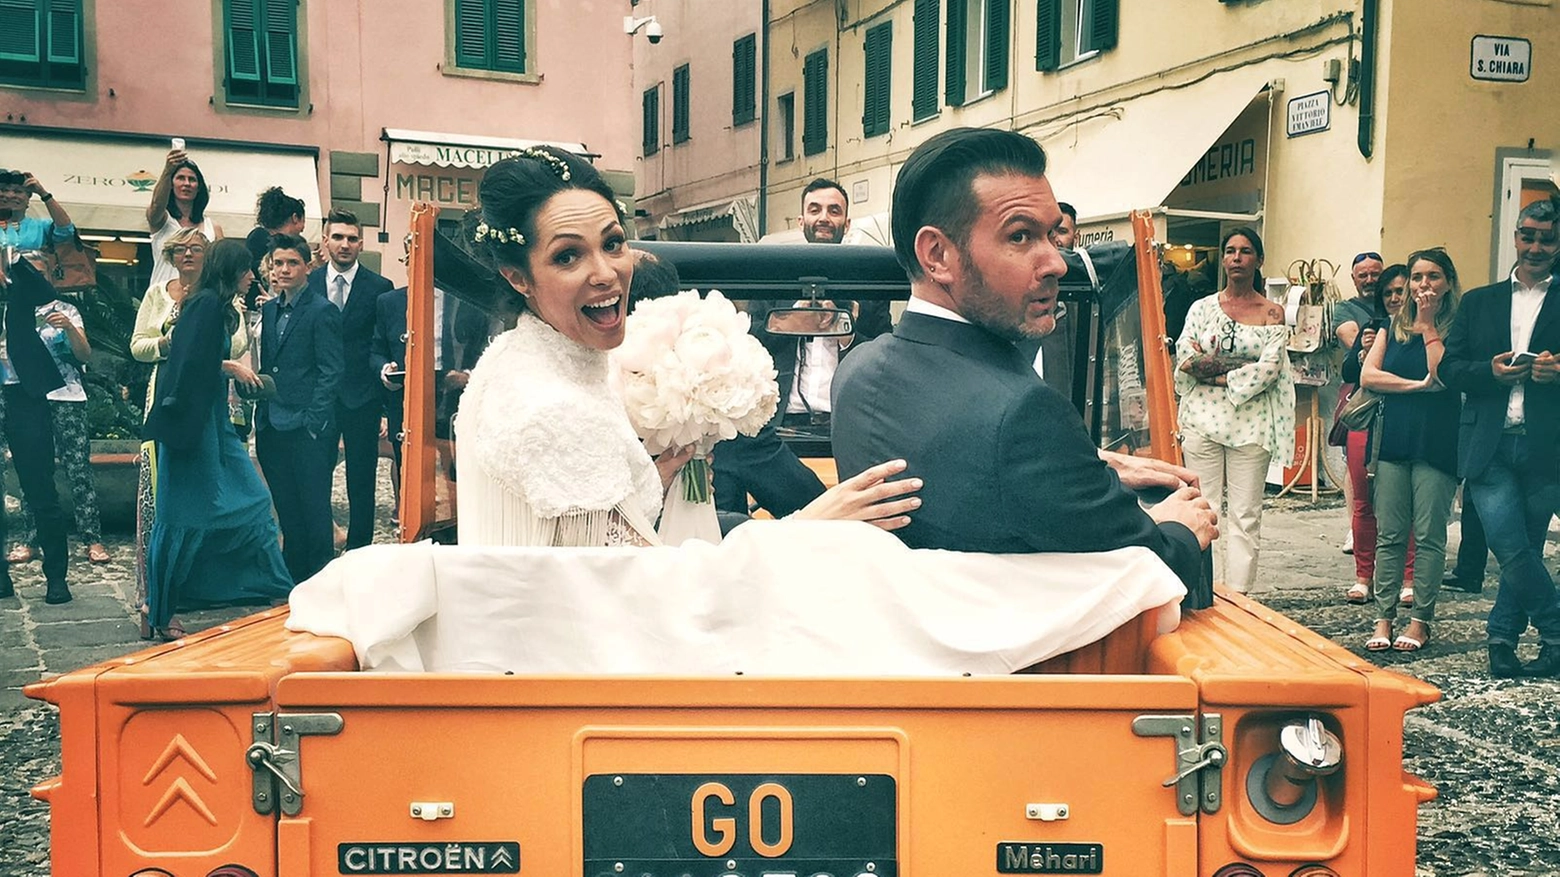 Andrea Mariano e Lavinia Biancalani sposi all'Elba